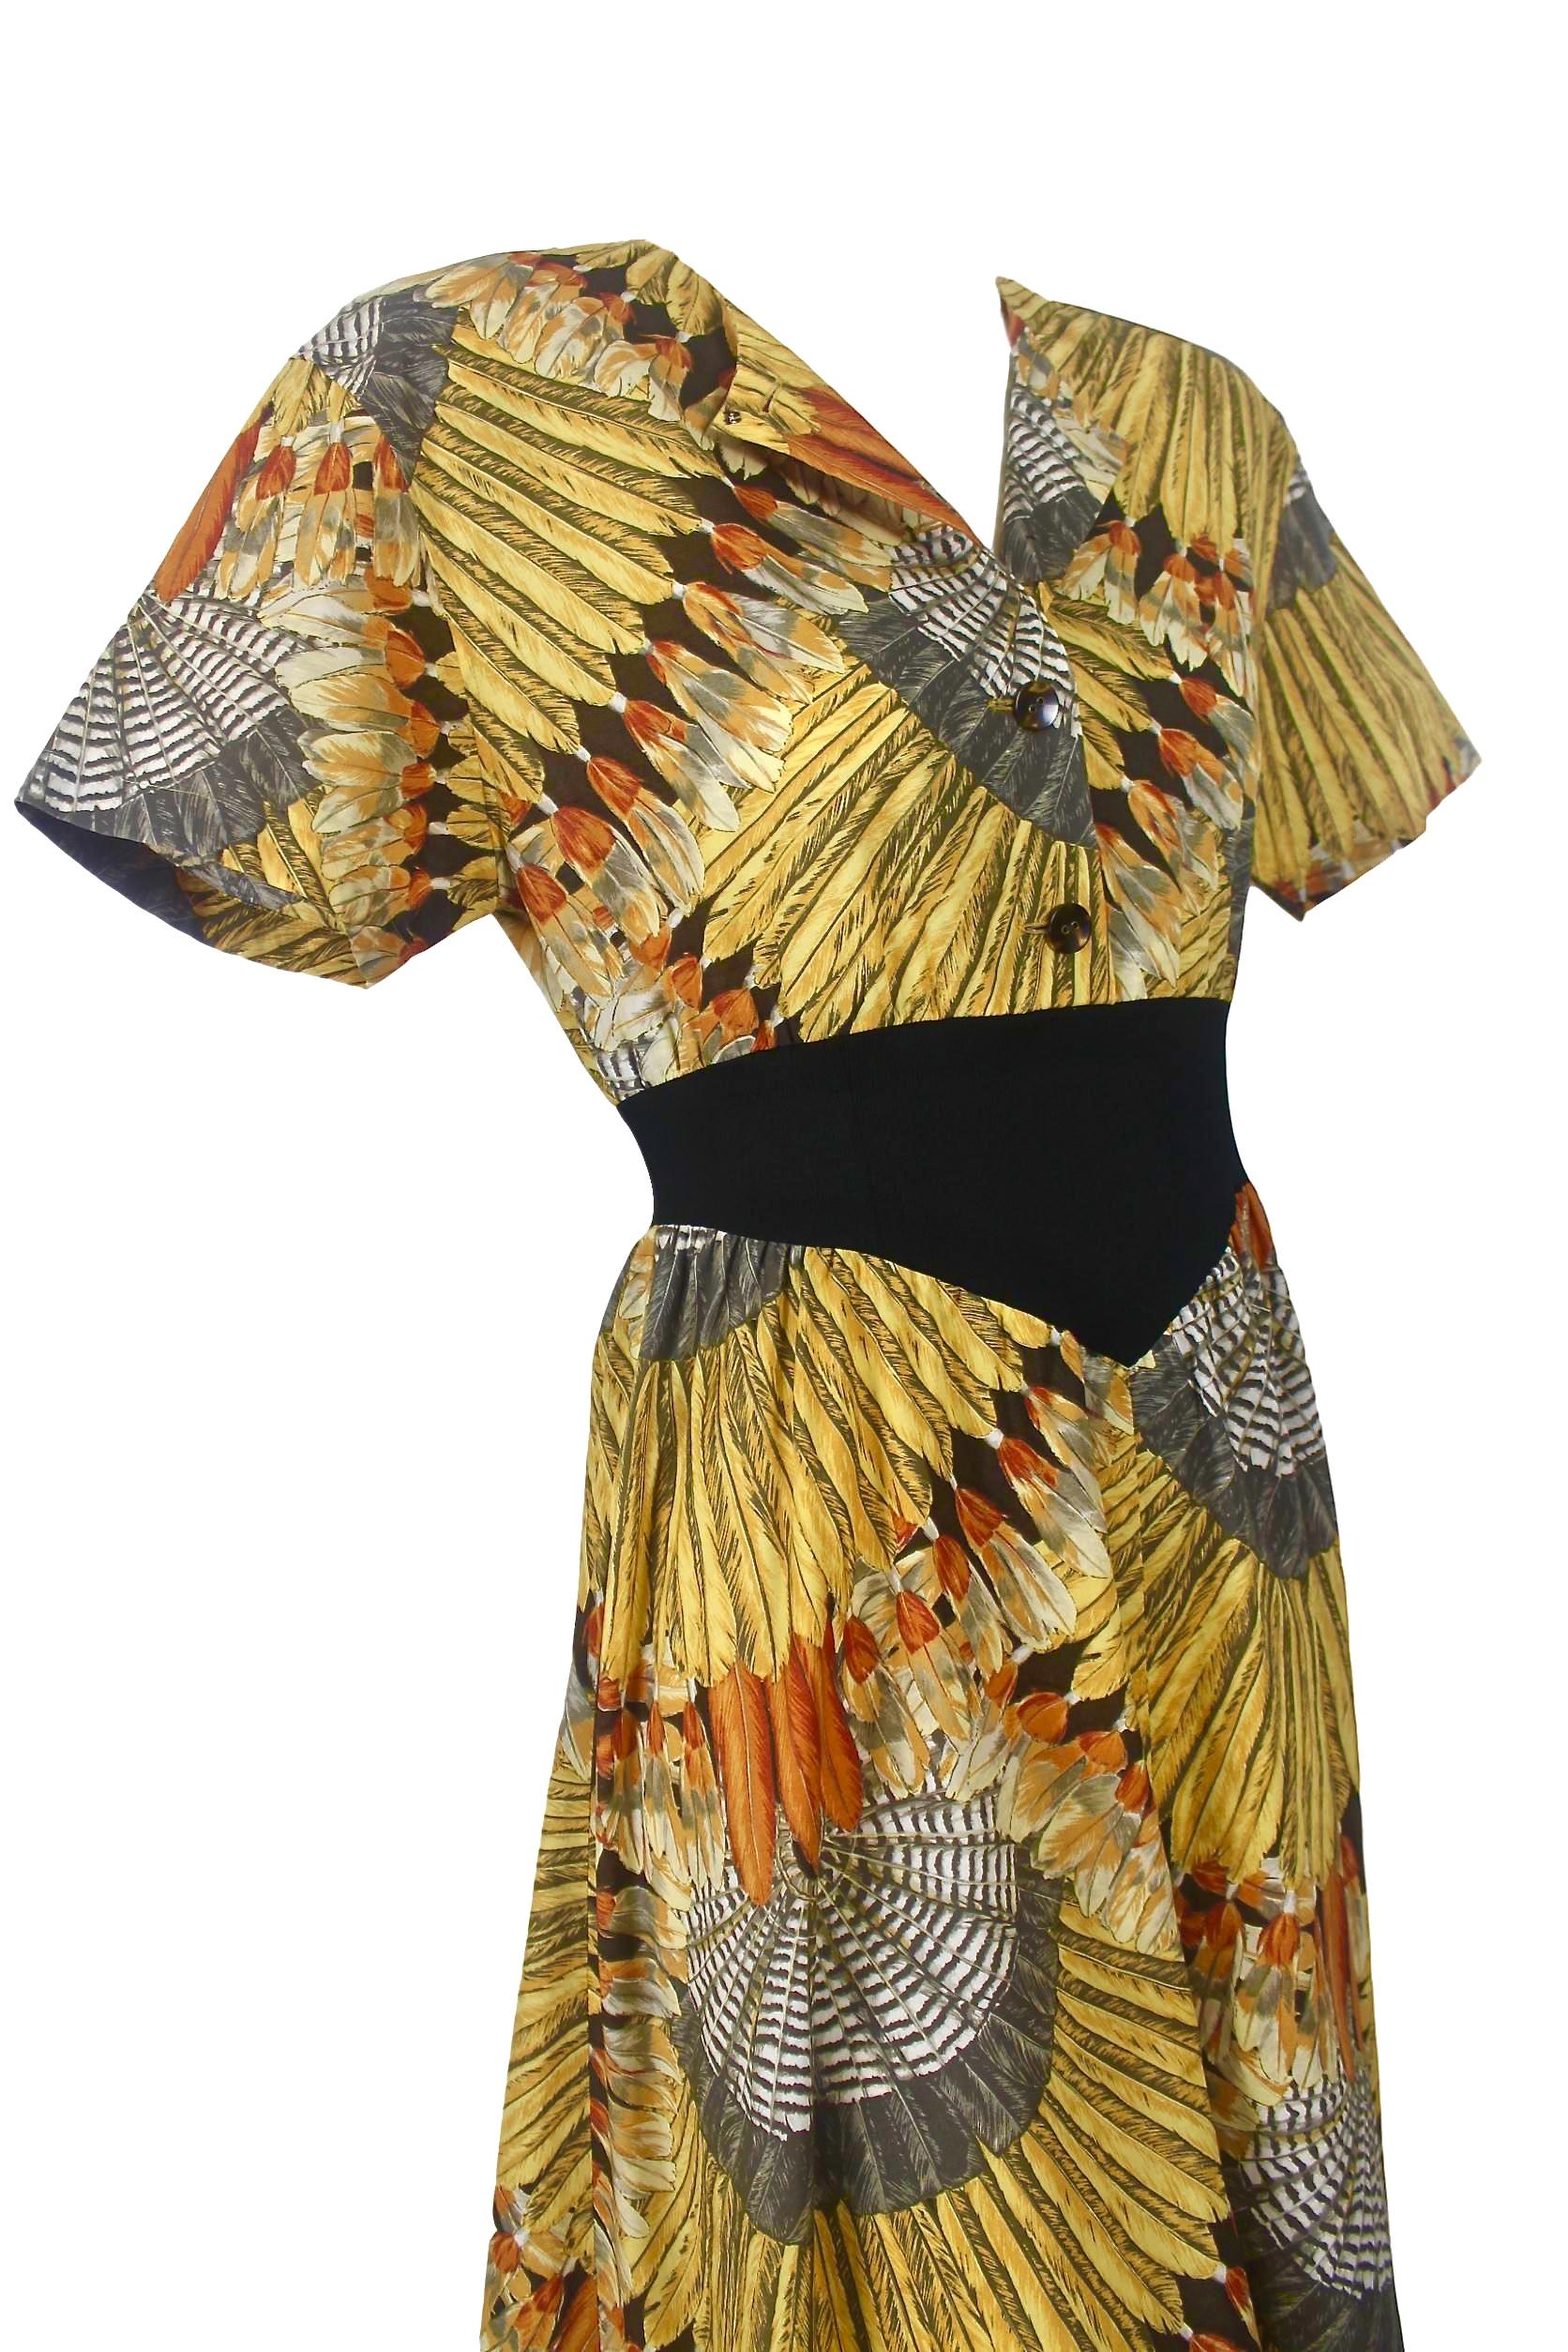 Sorelle Fontana Feather Print Dress For Sale 2